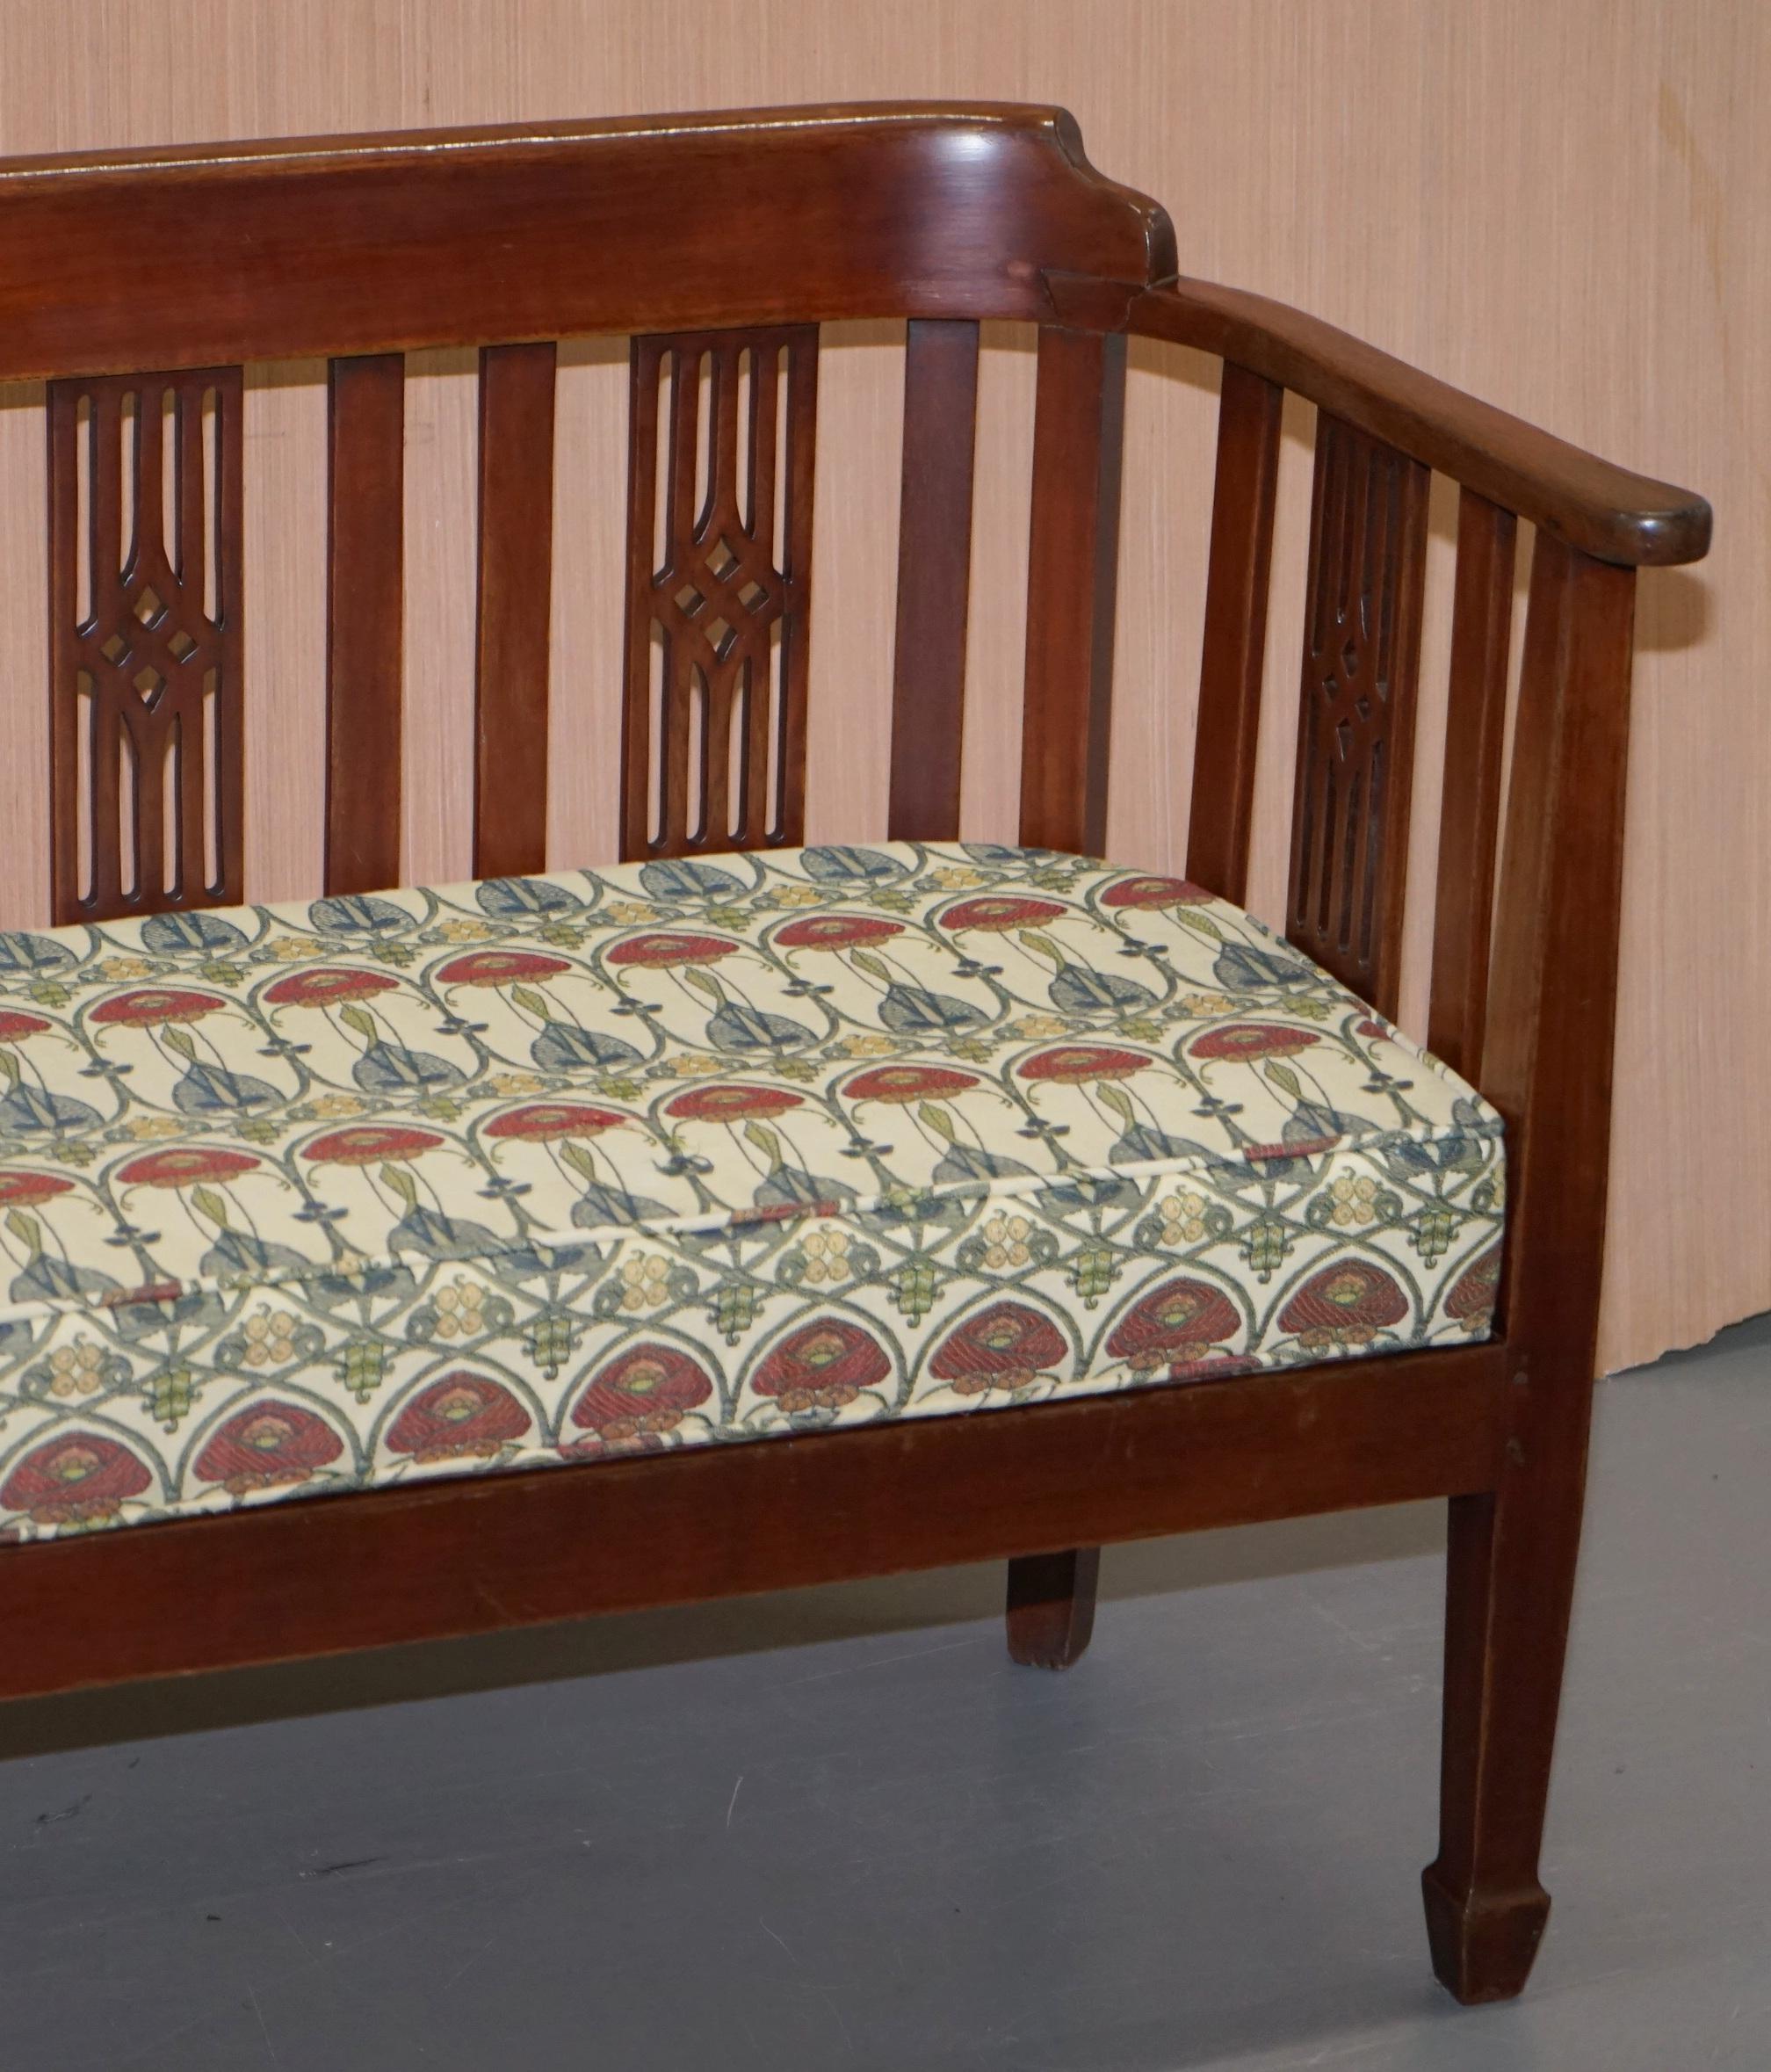 English Charles Rennie Mackintosh Art Nouveau upholstered 2 seat bench sofa berger seat